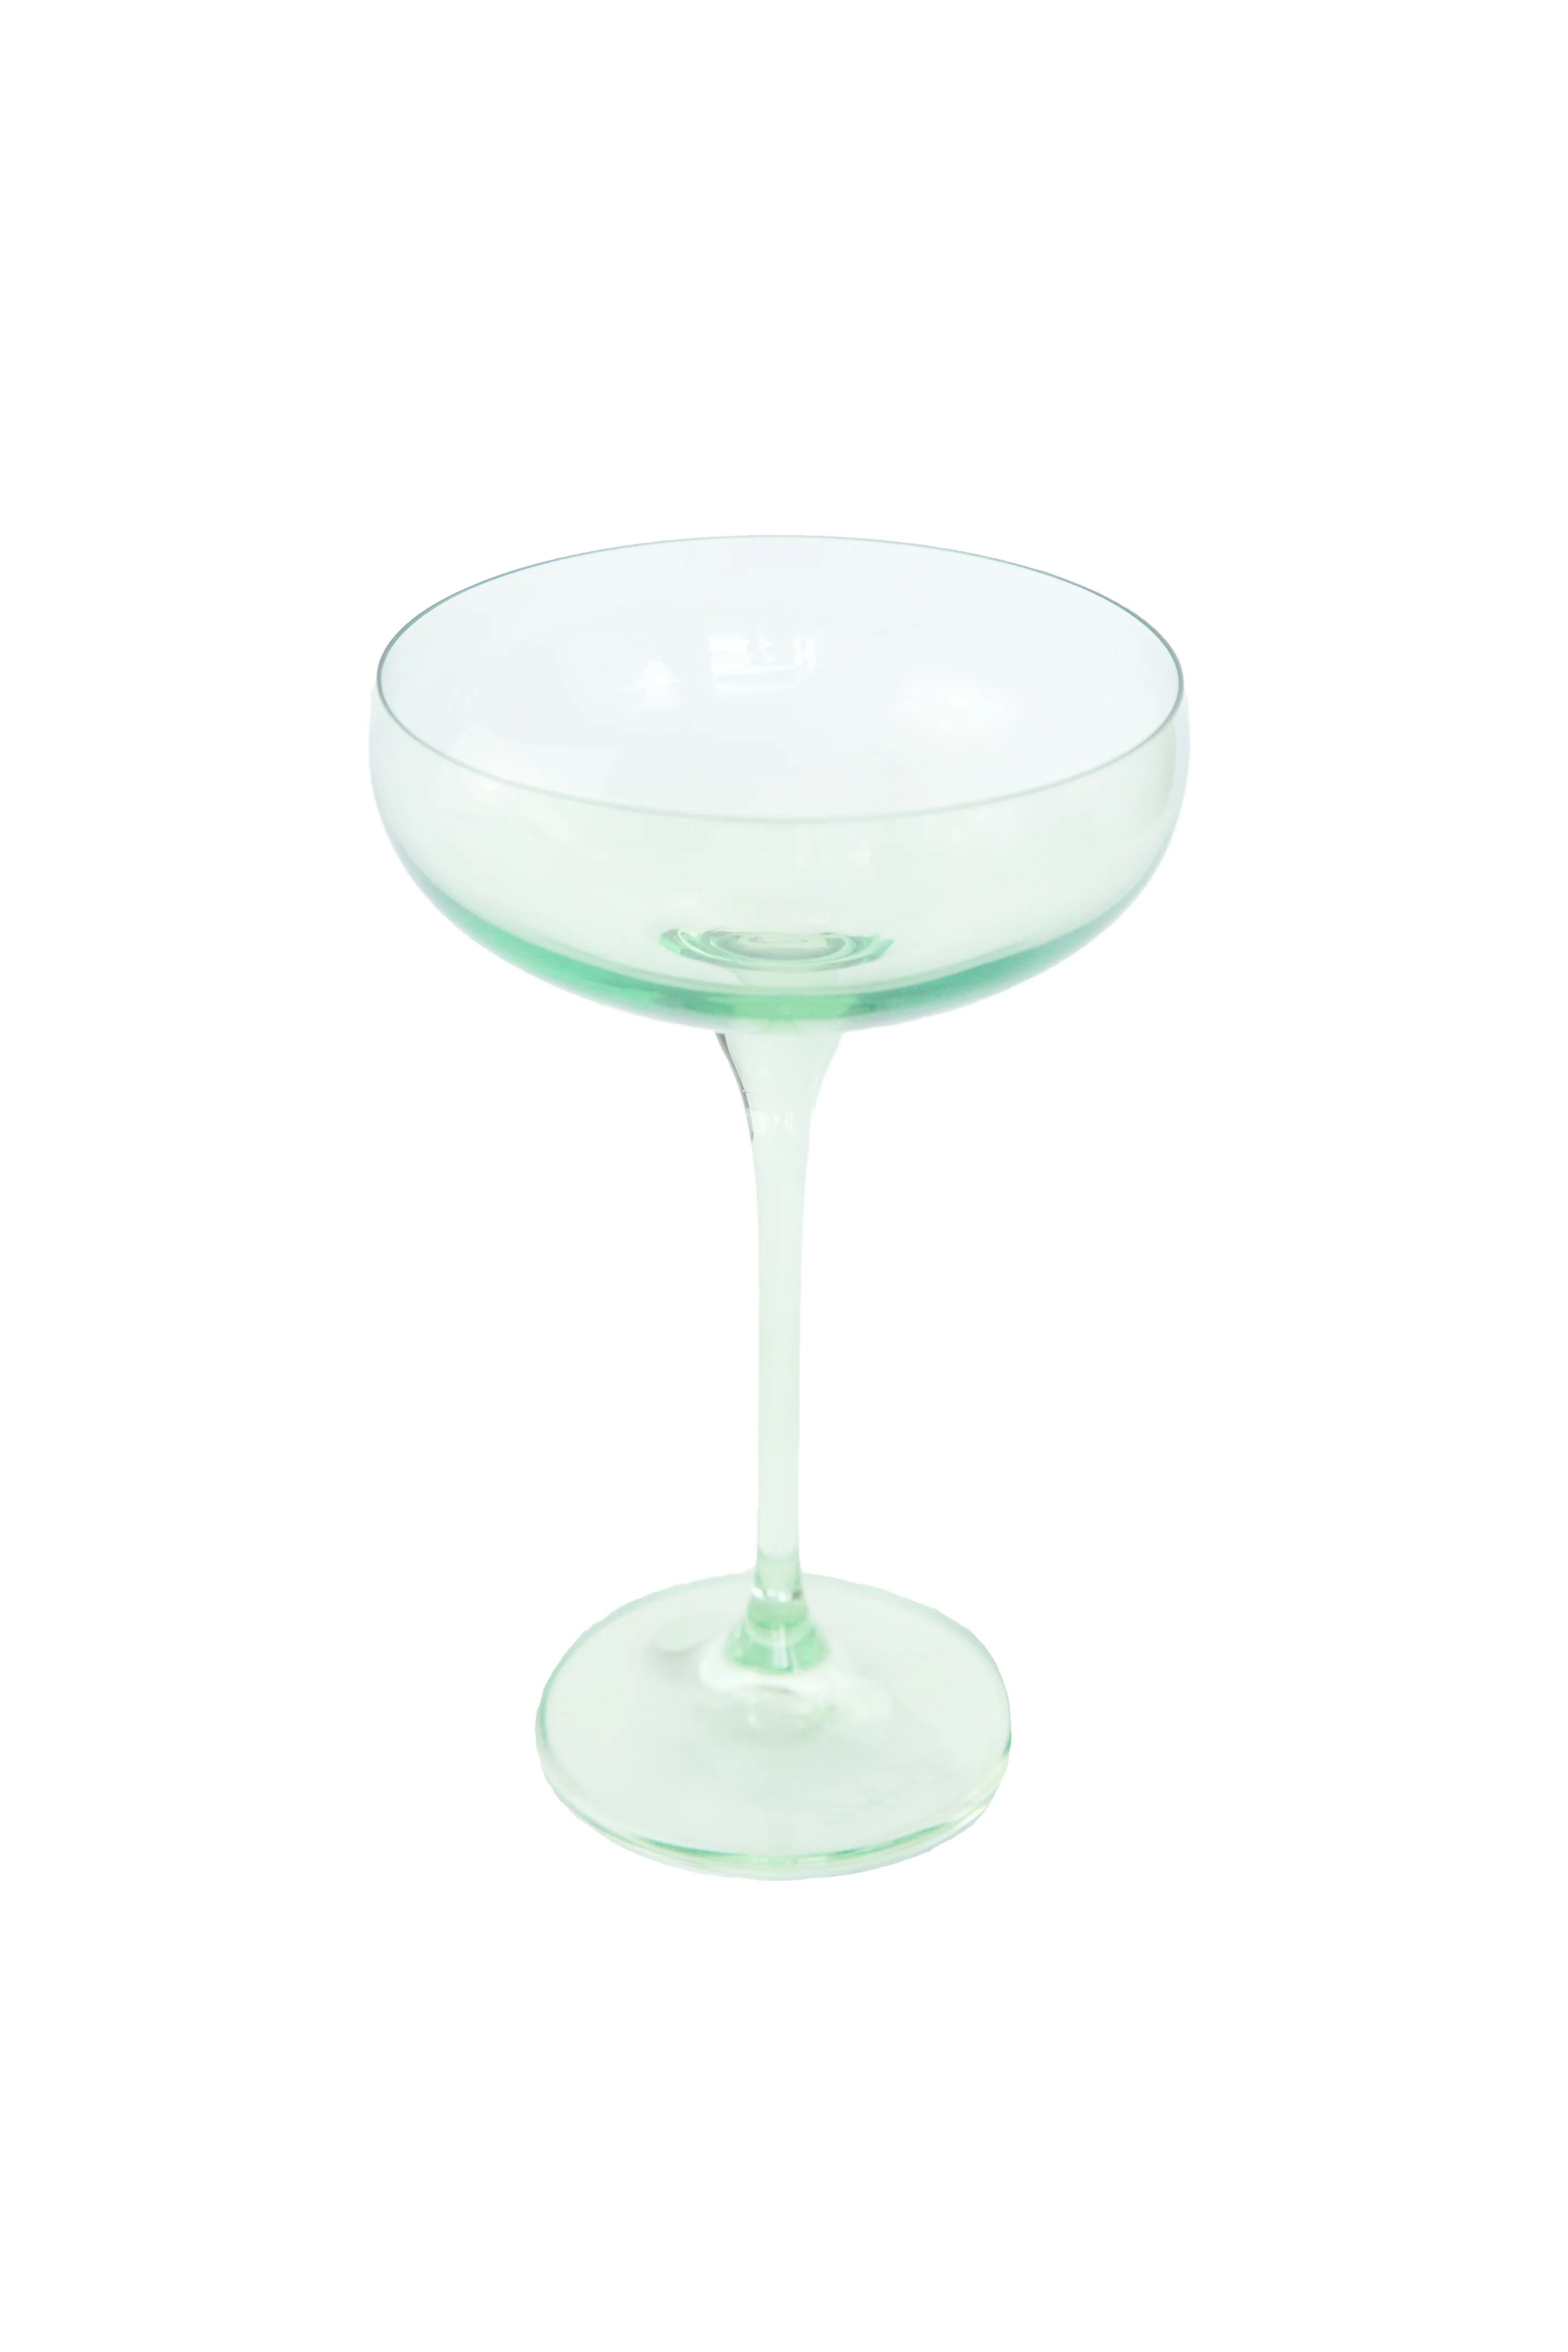 Estelle Colored Champagne Coupe Stemware - Set of 2 {Mint Green} | Estelle Colored Glass